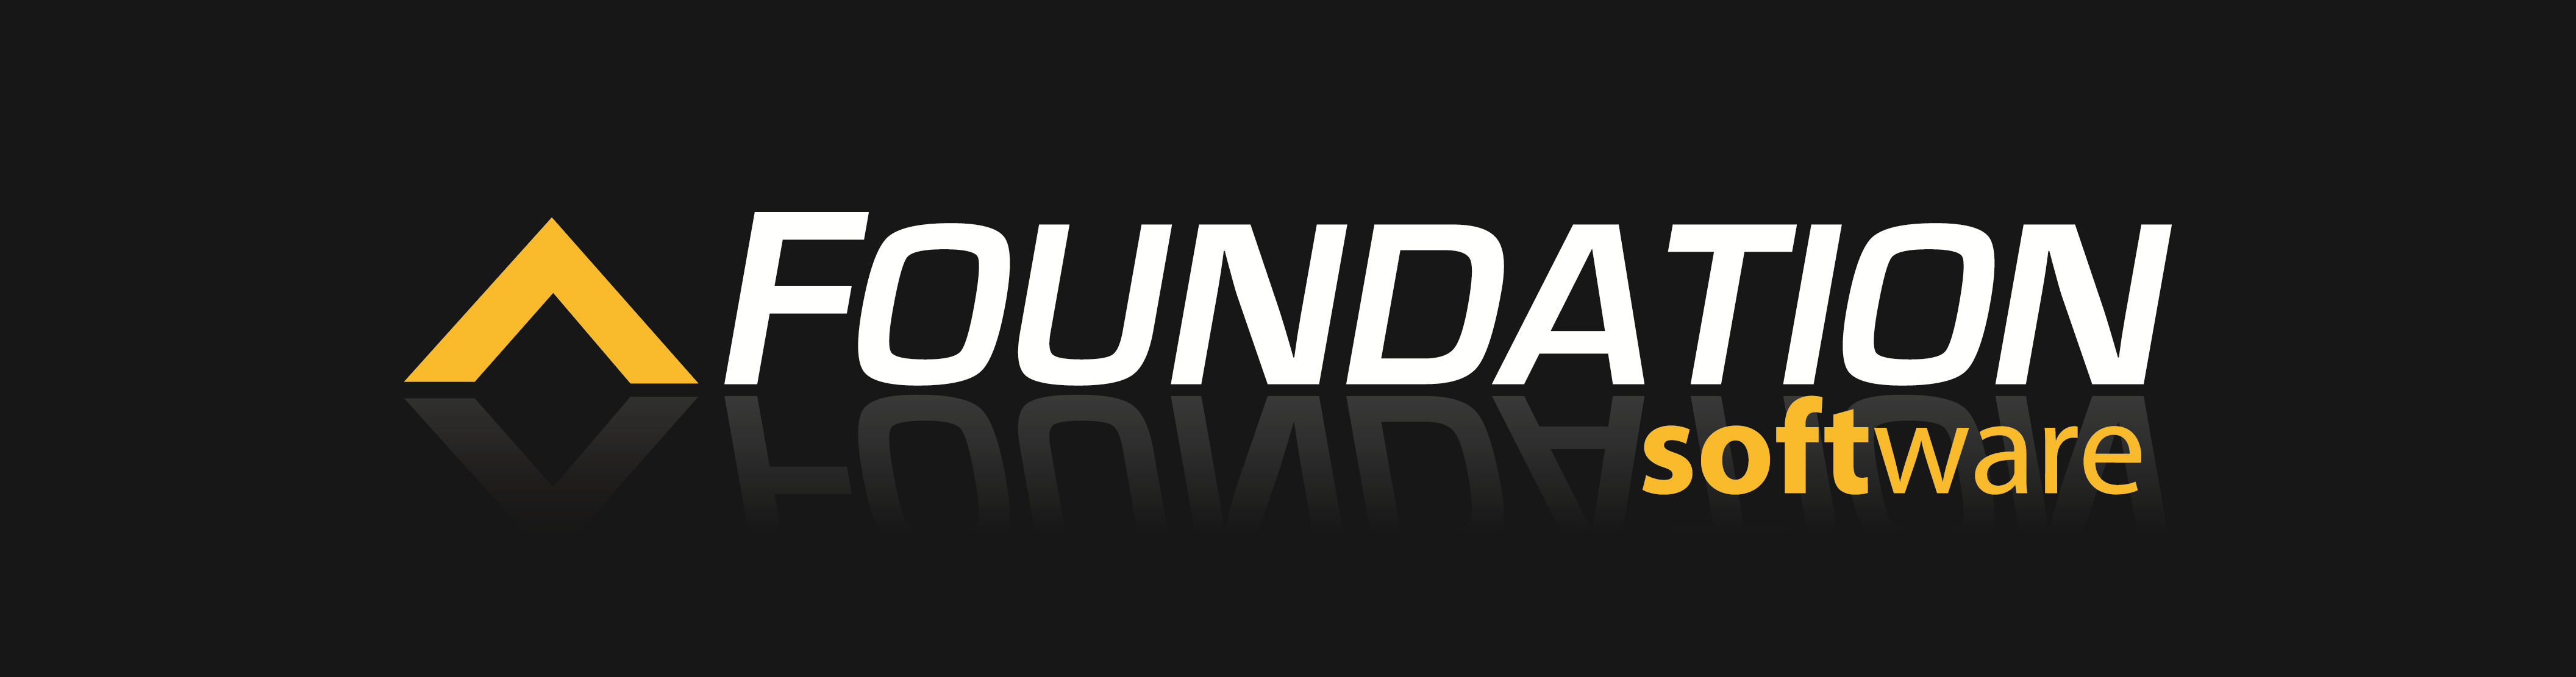 Foundation Software Company Logo